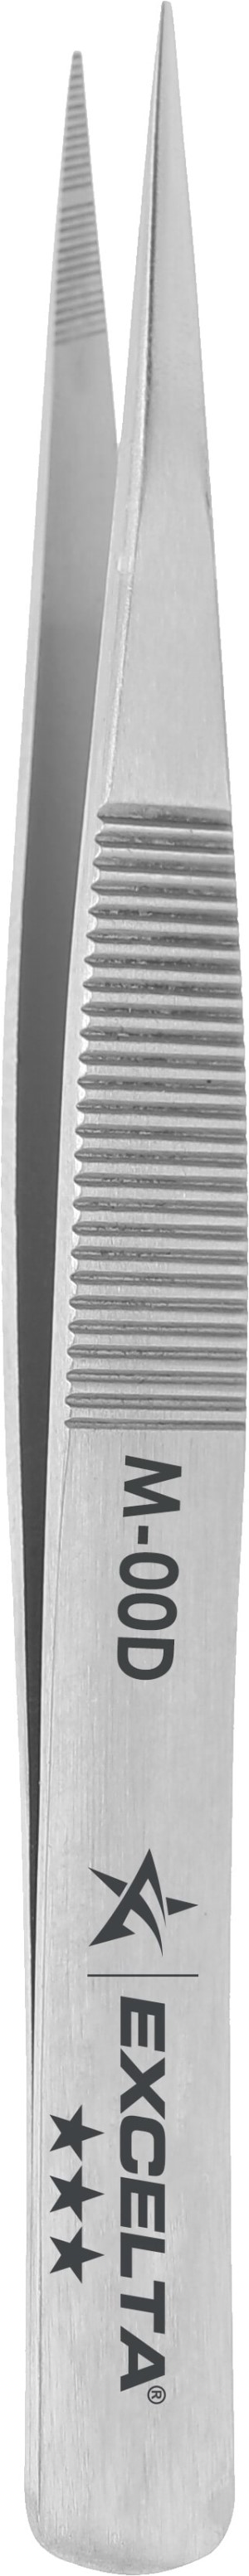 Tweezers - Straight Medium Point - Miniature Carbon Steel - Tip Serrations